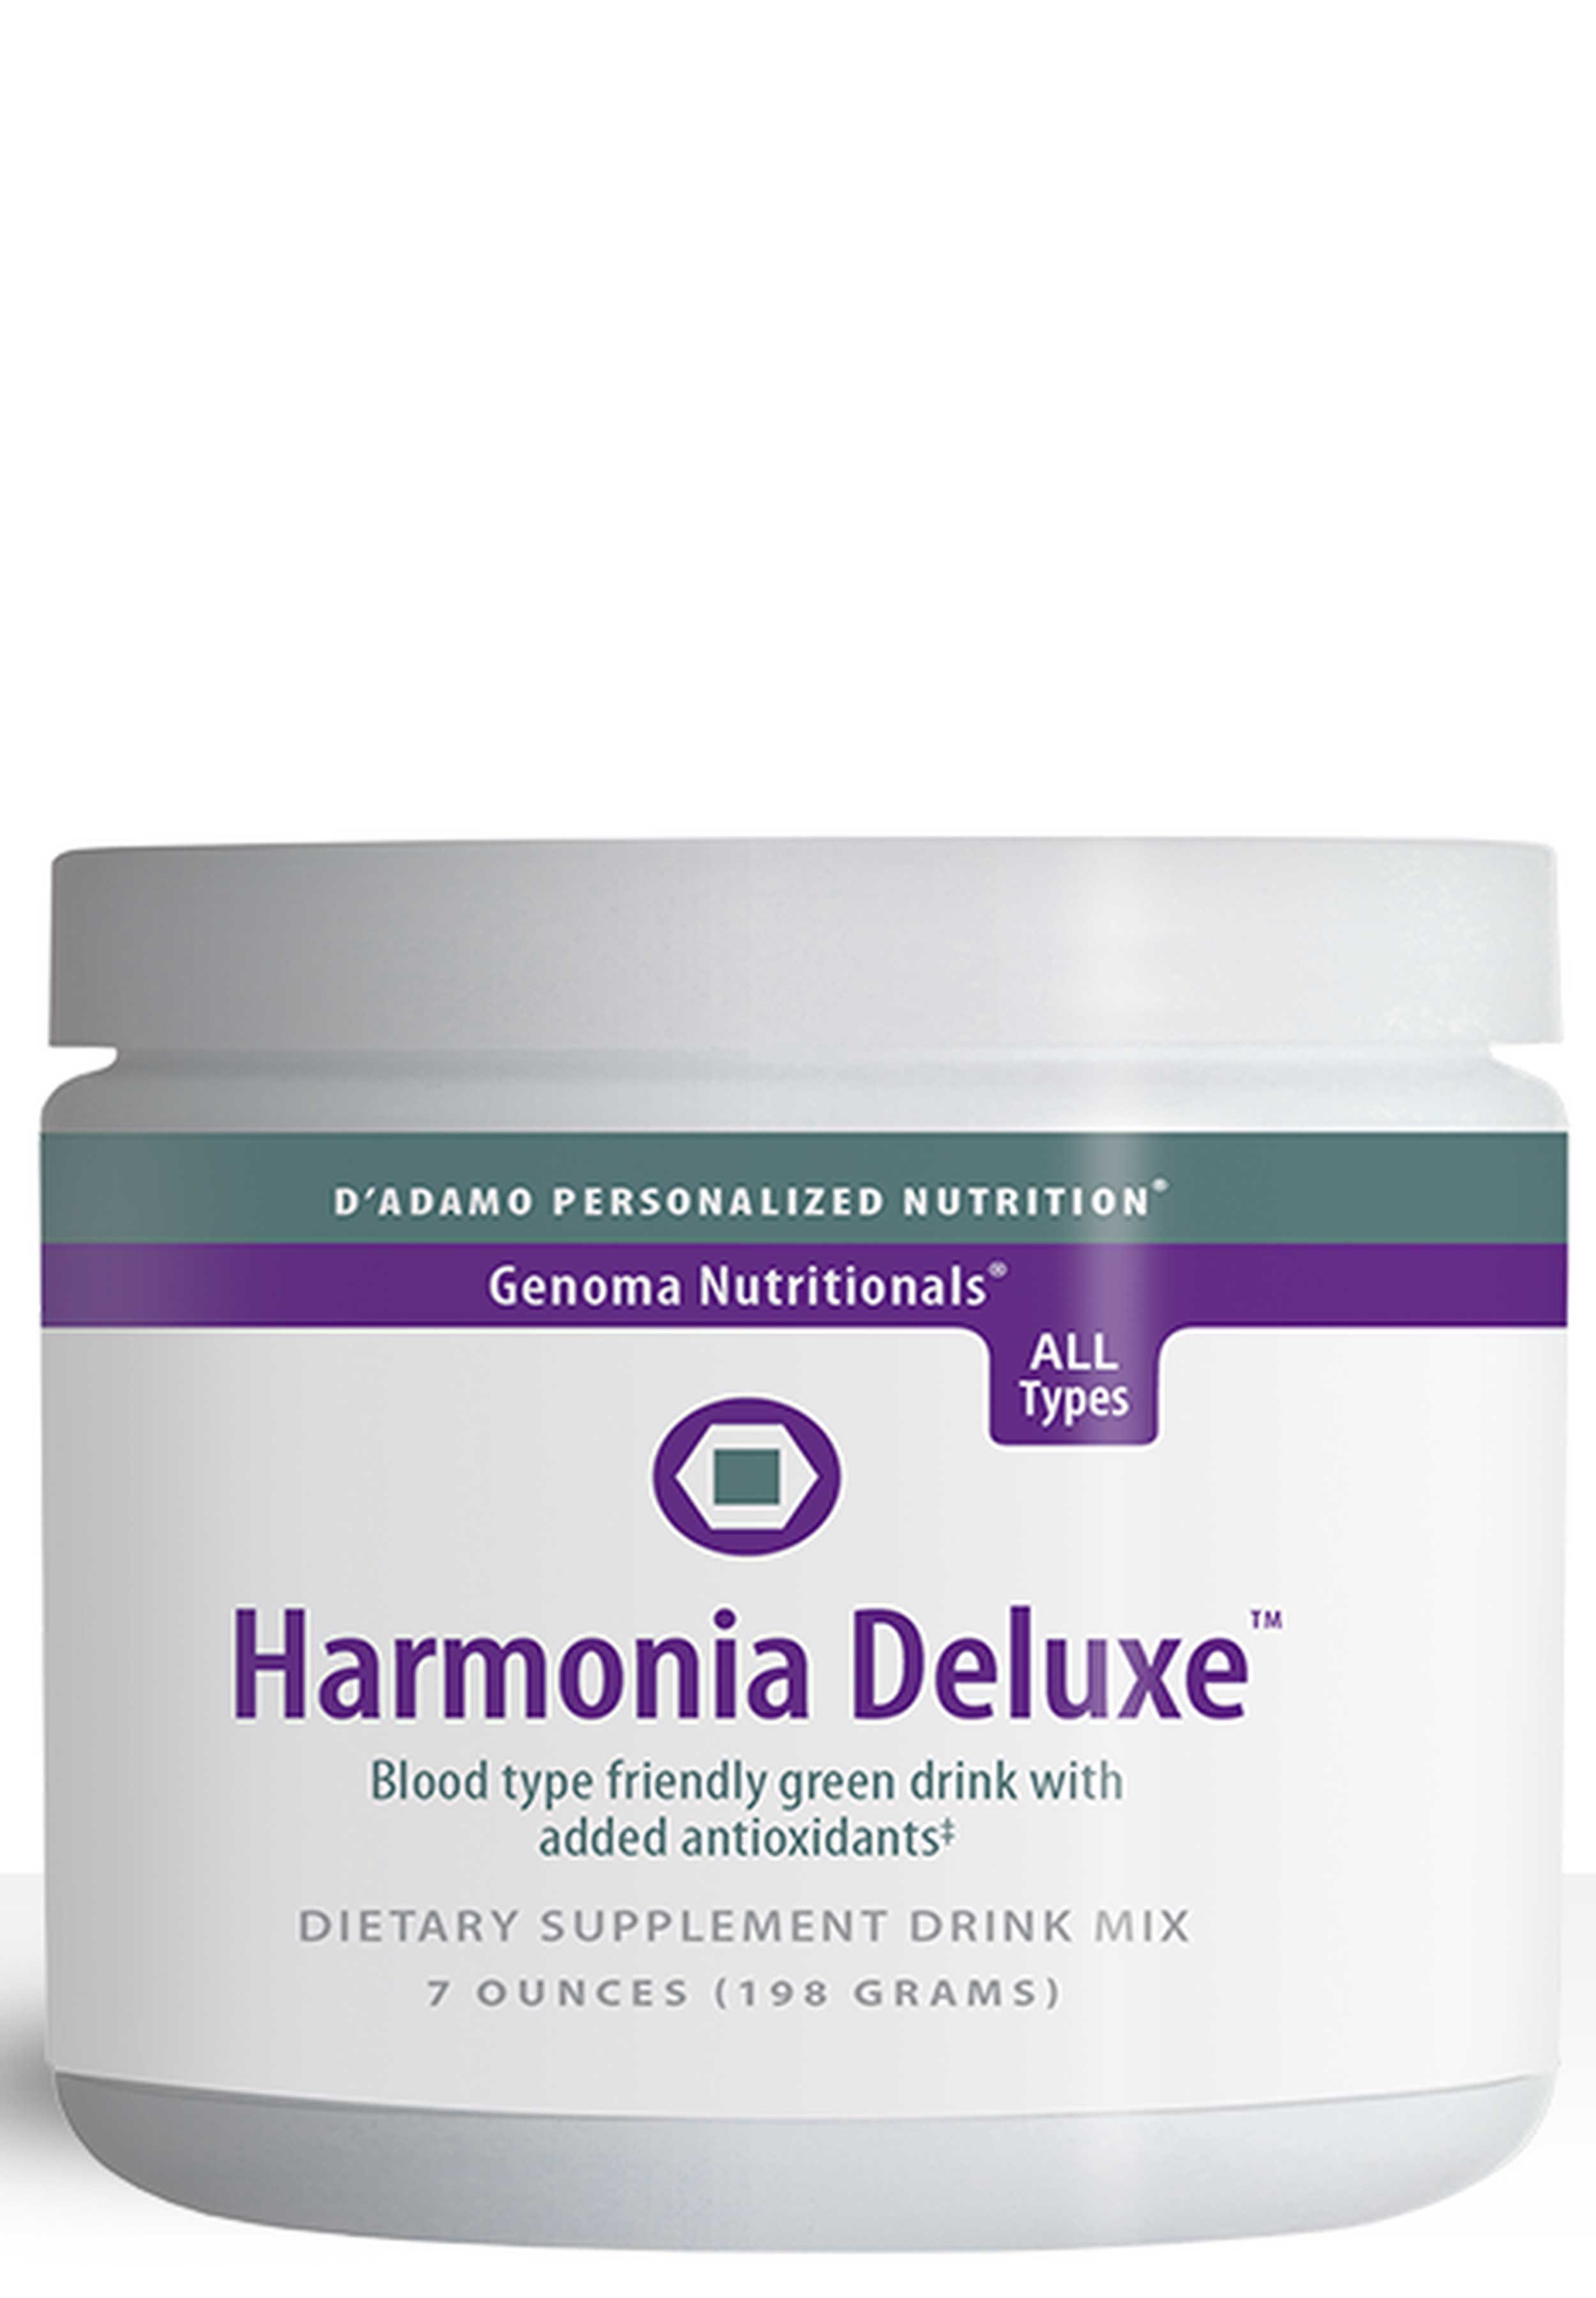 D'Adamo Personalized Nutrition Harmonia Deluxe